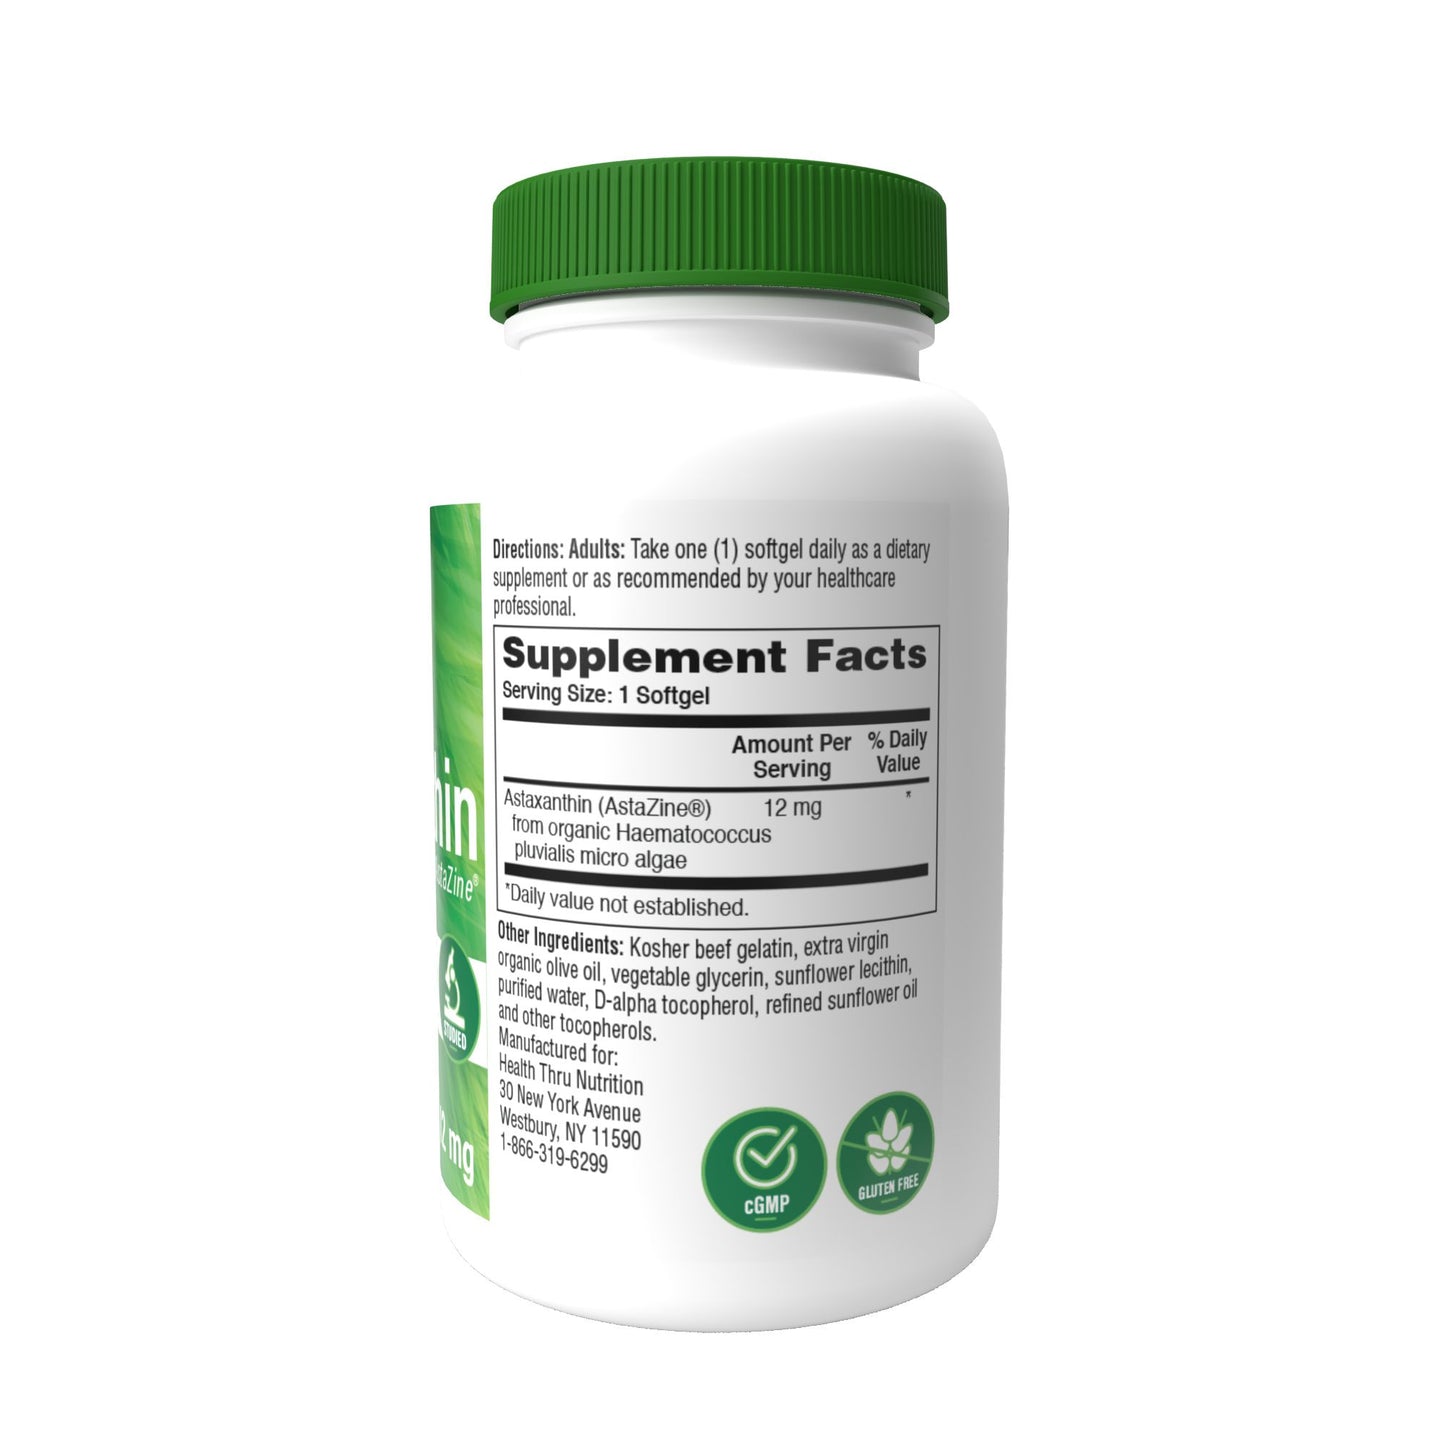 Health Thru Nutrition Astaxanthin 12mg (as AstaZine Organic Algae) NON-GMO) 30 Softgels Healthy Skin and Vision